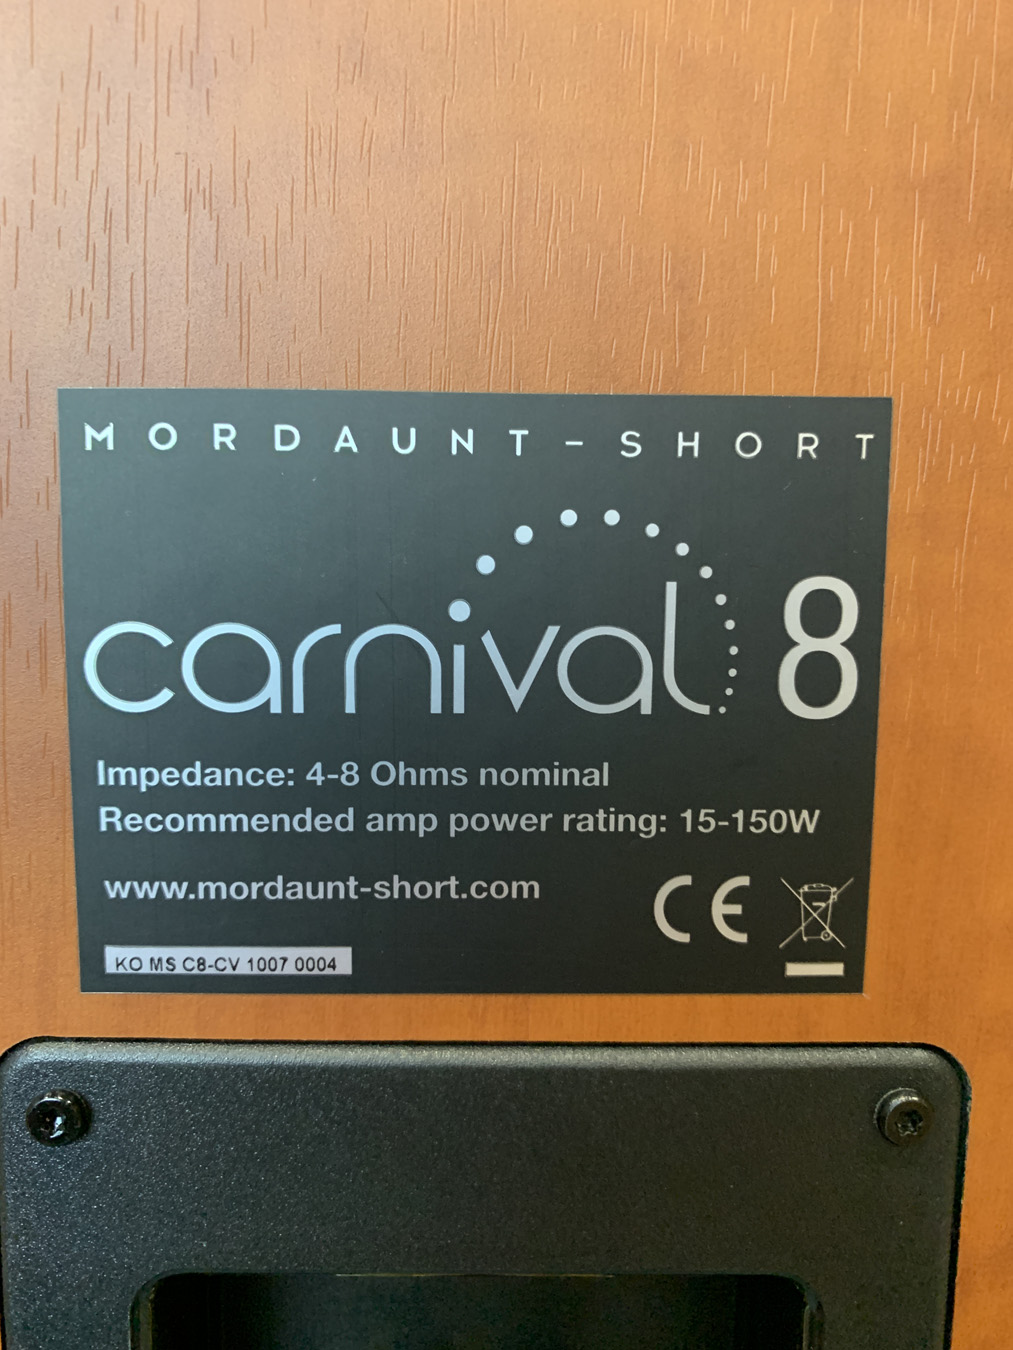 Mordaunt-Short Carnival 8 calvados